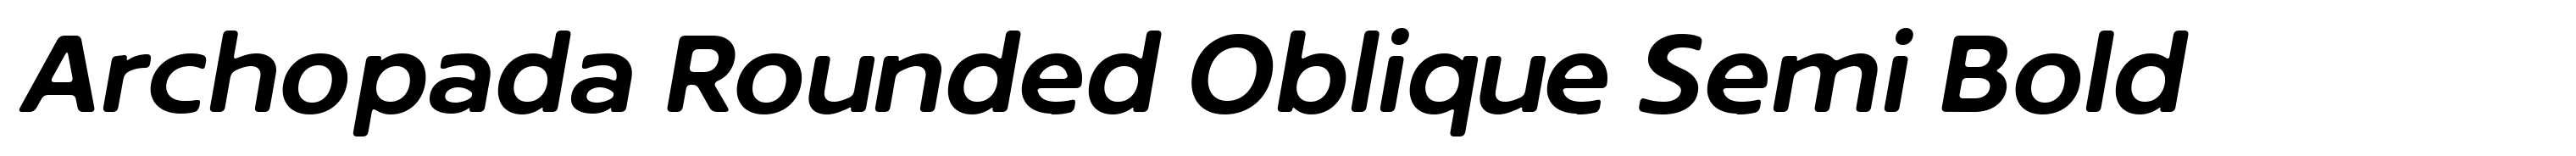 Archopada Rounded Oblique Semi Bold